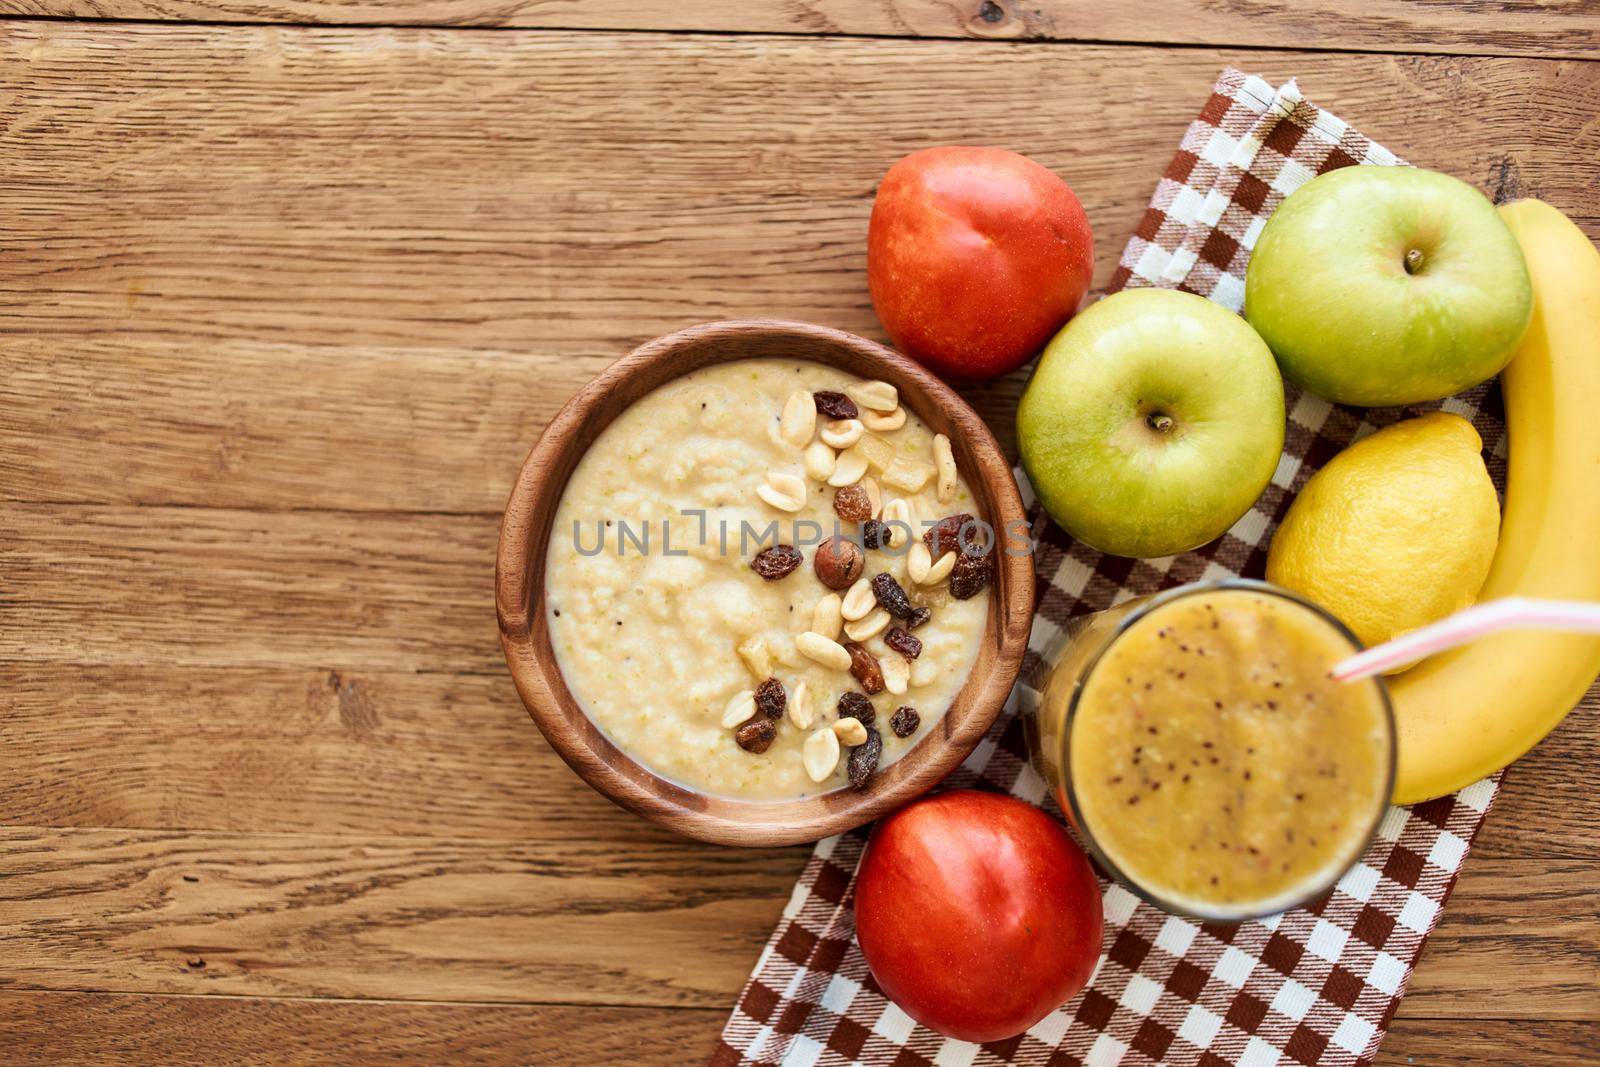 fruit plate dessert breakfast snack healthy food vitamins. High quality photo